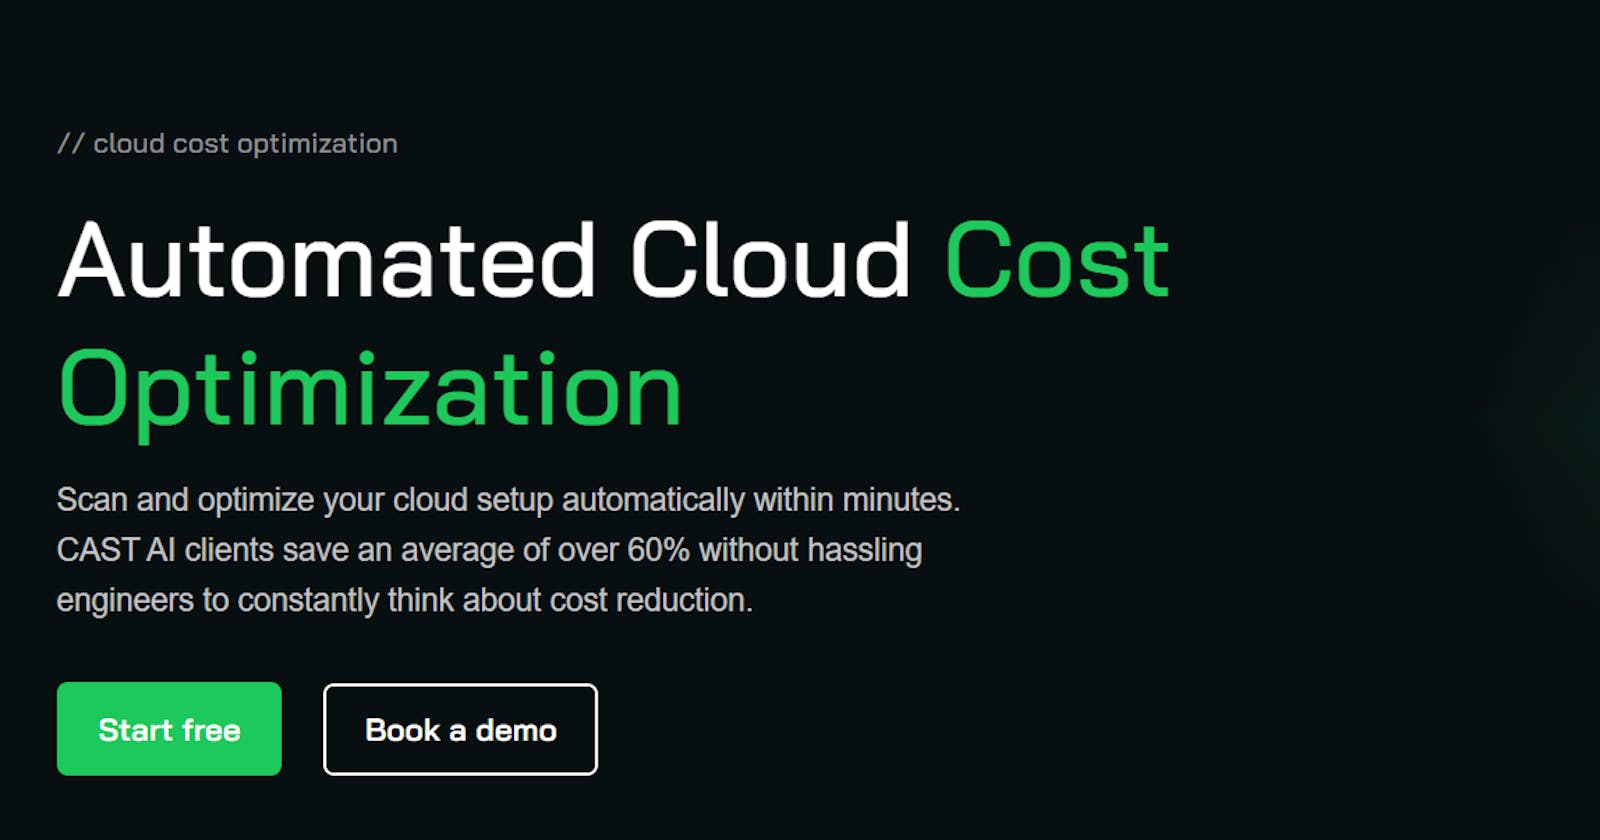 Cloud Cost Optimization using CastAI